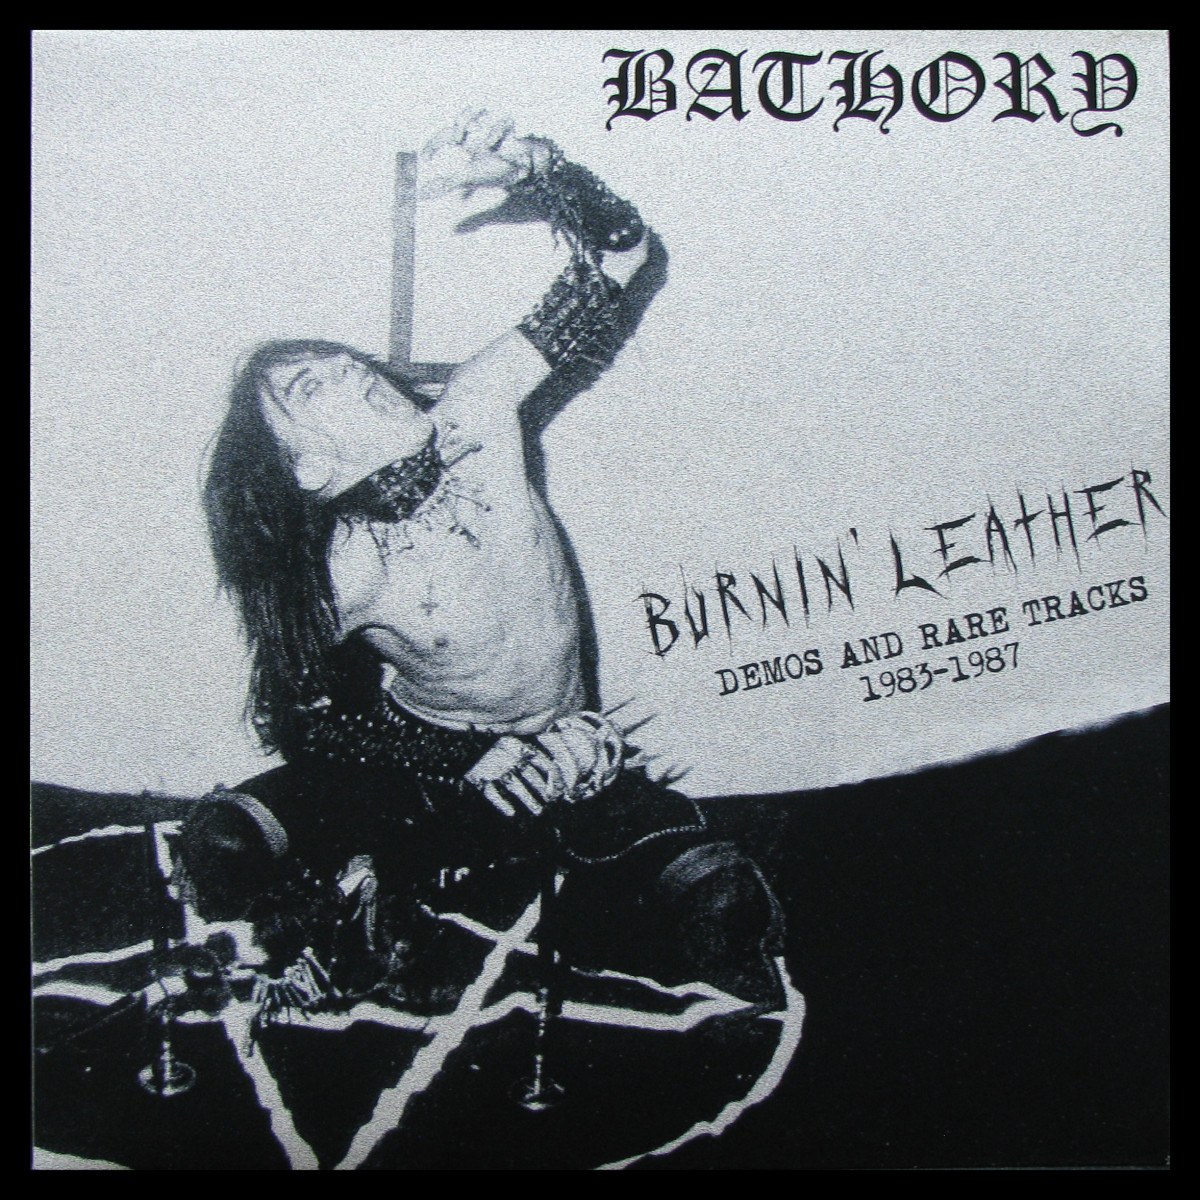 Burnin' Leather Demos And Rare Tracks 1983-1987